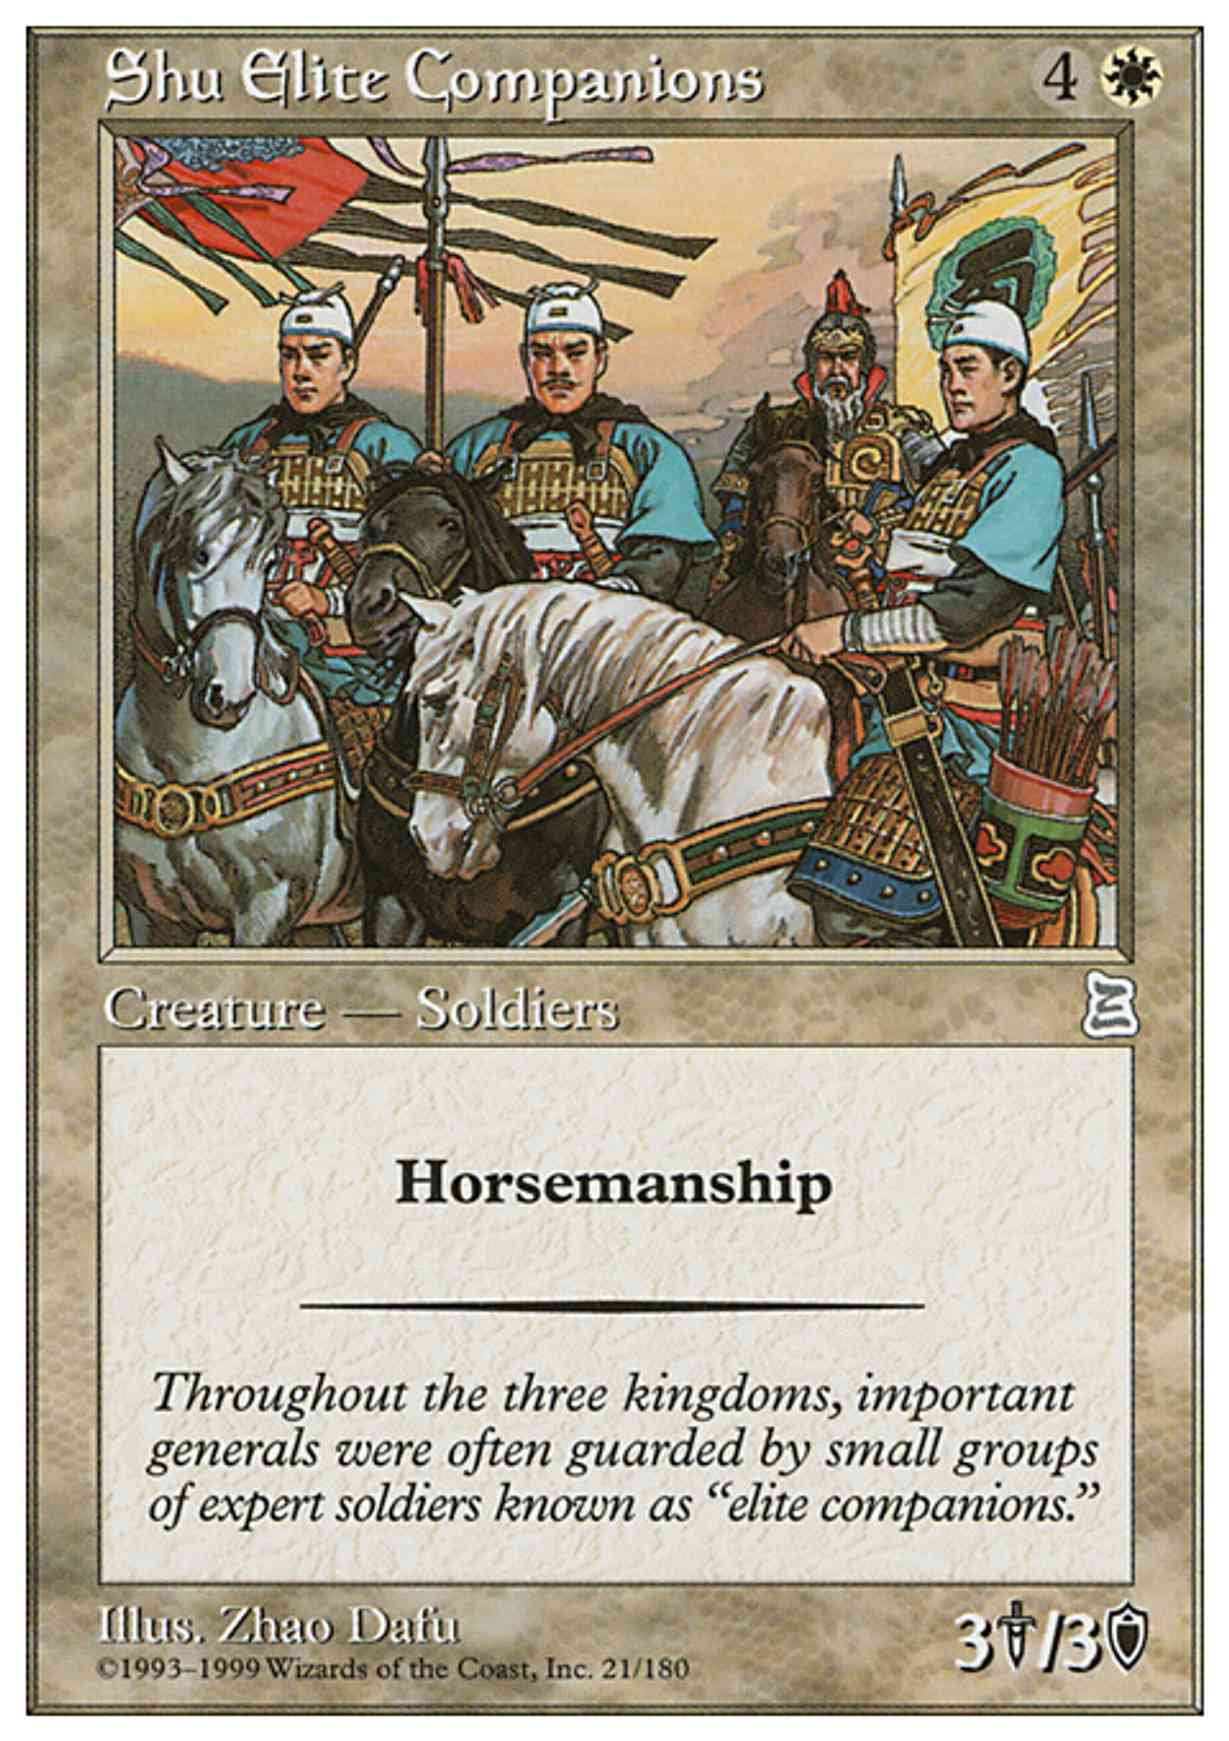 Shu Elite Companions magic card front